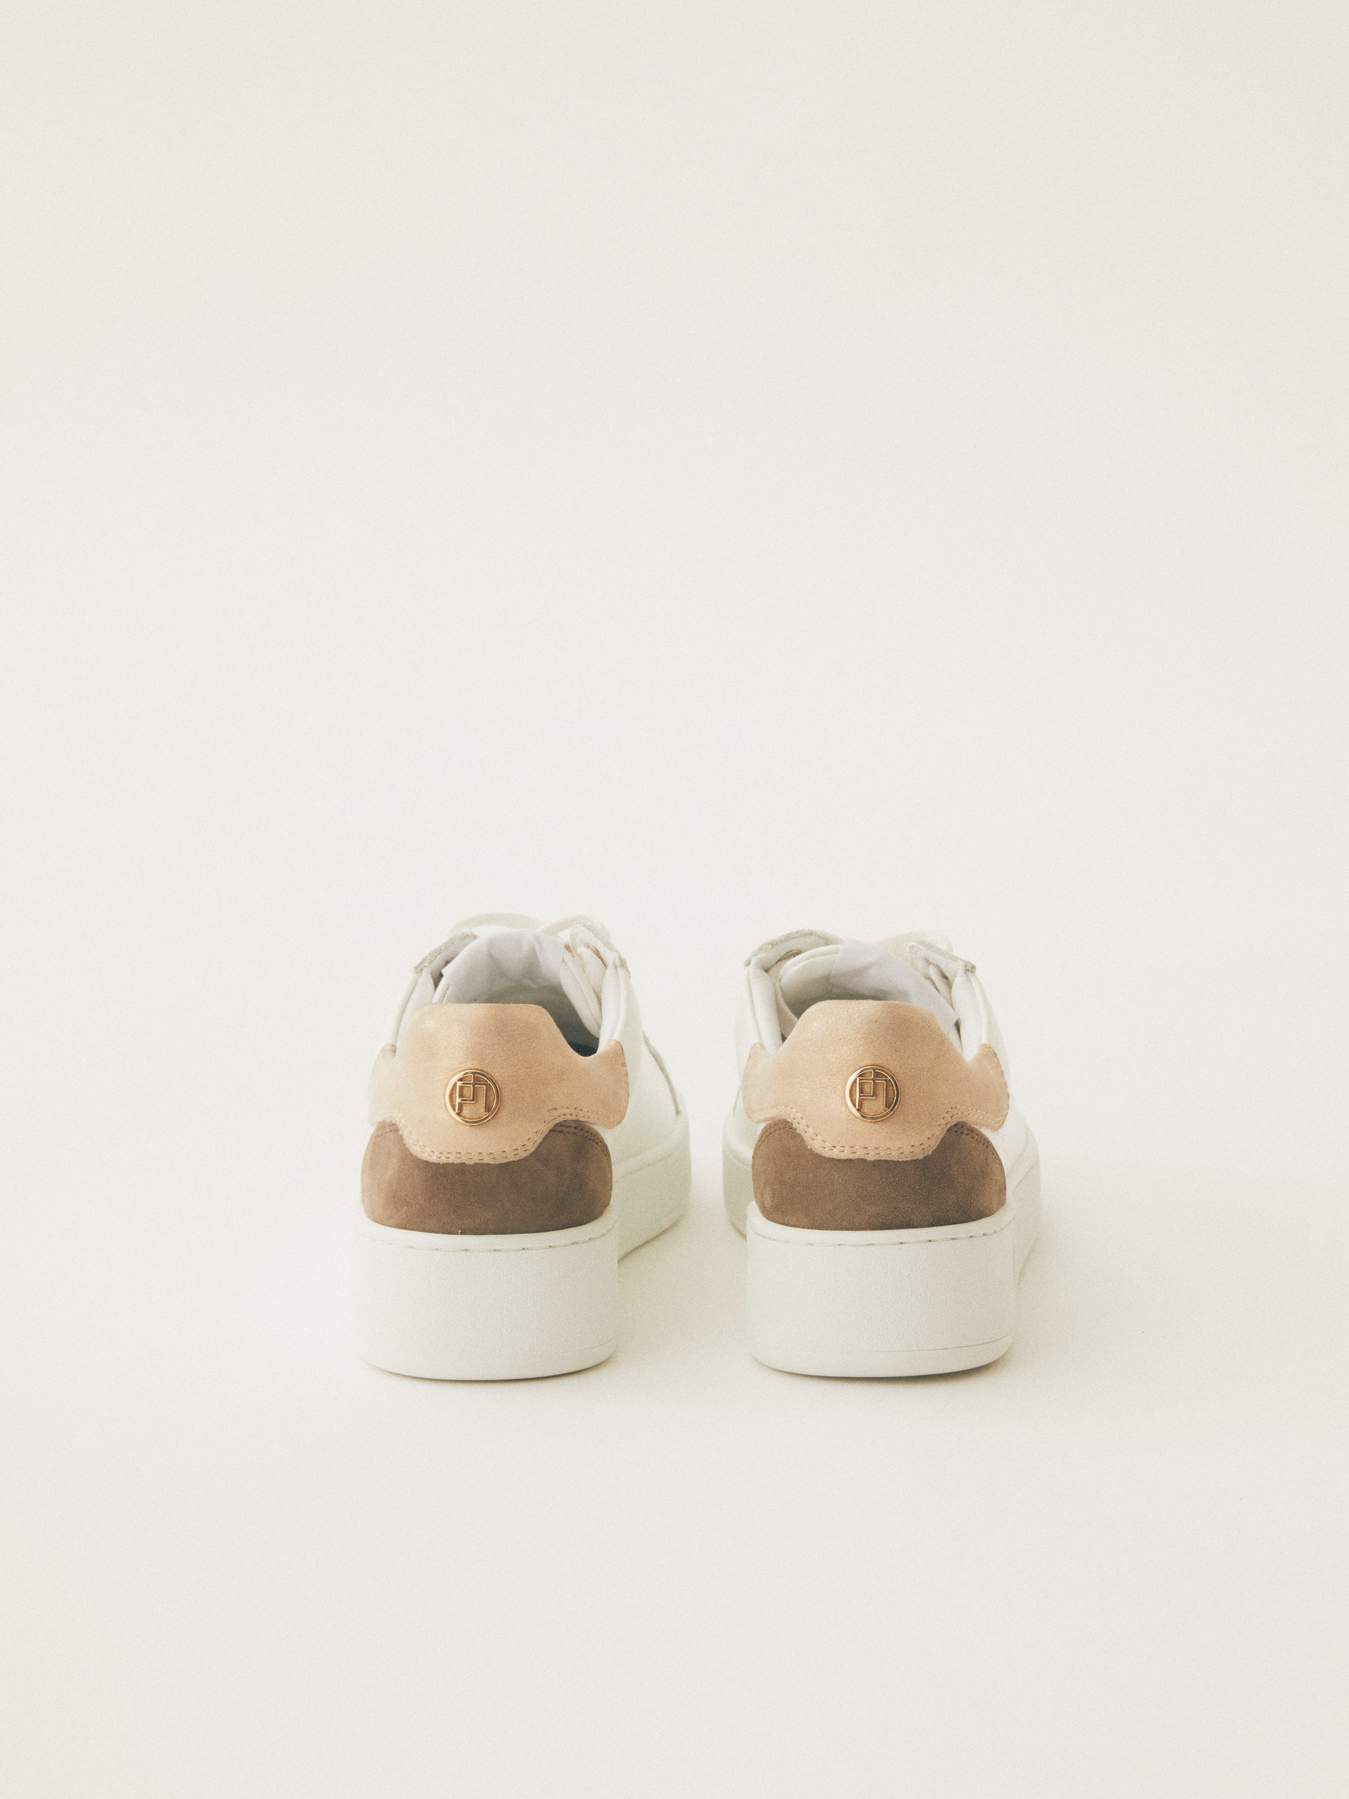 Philip Hog Lova Sneakers, White/Chocolate Chip, 40